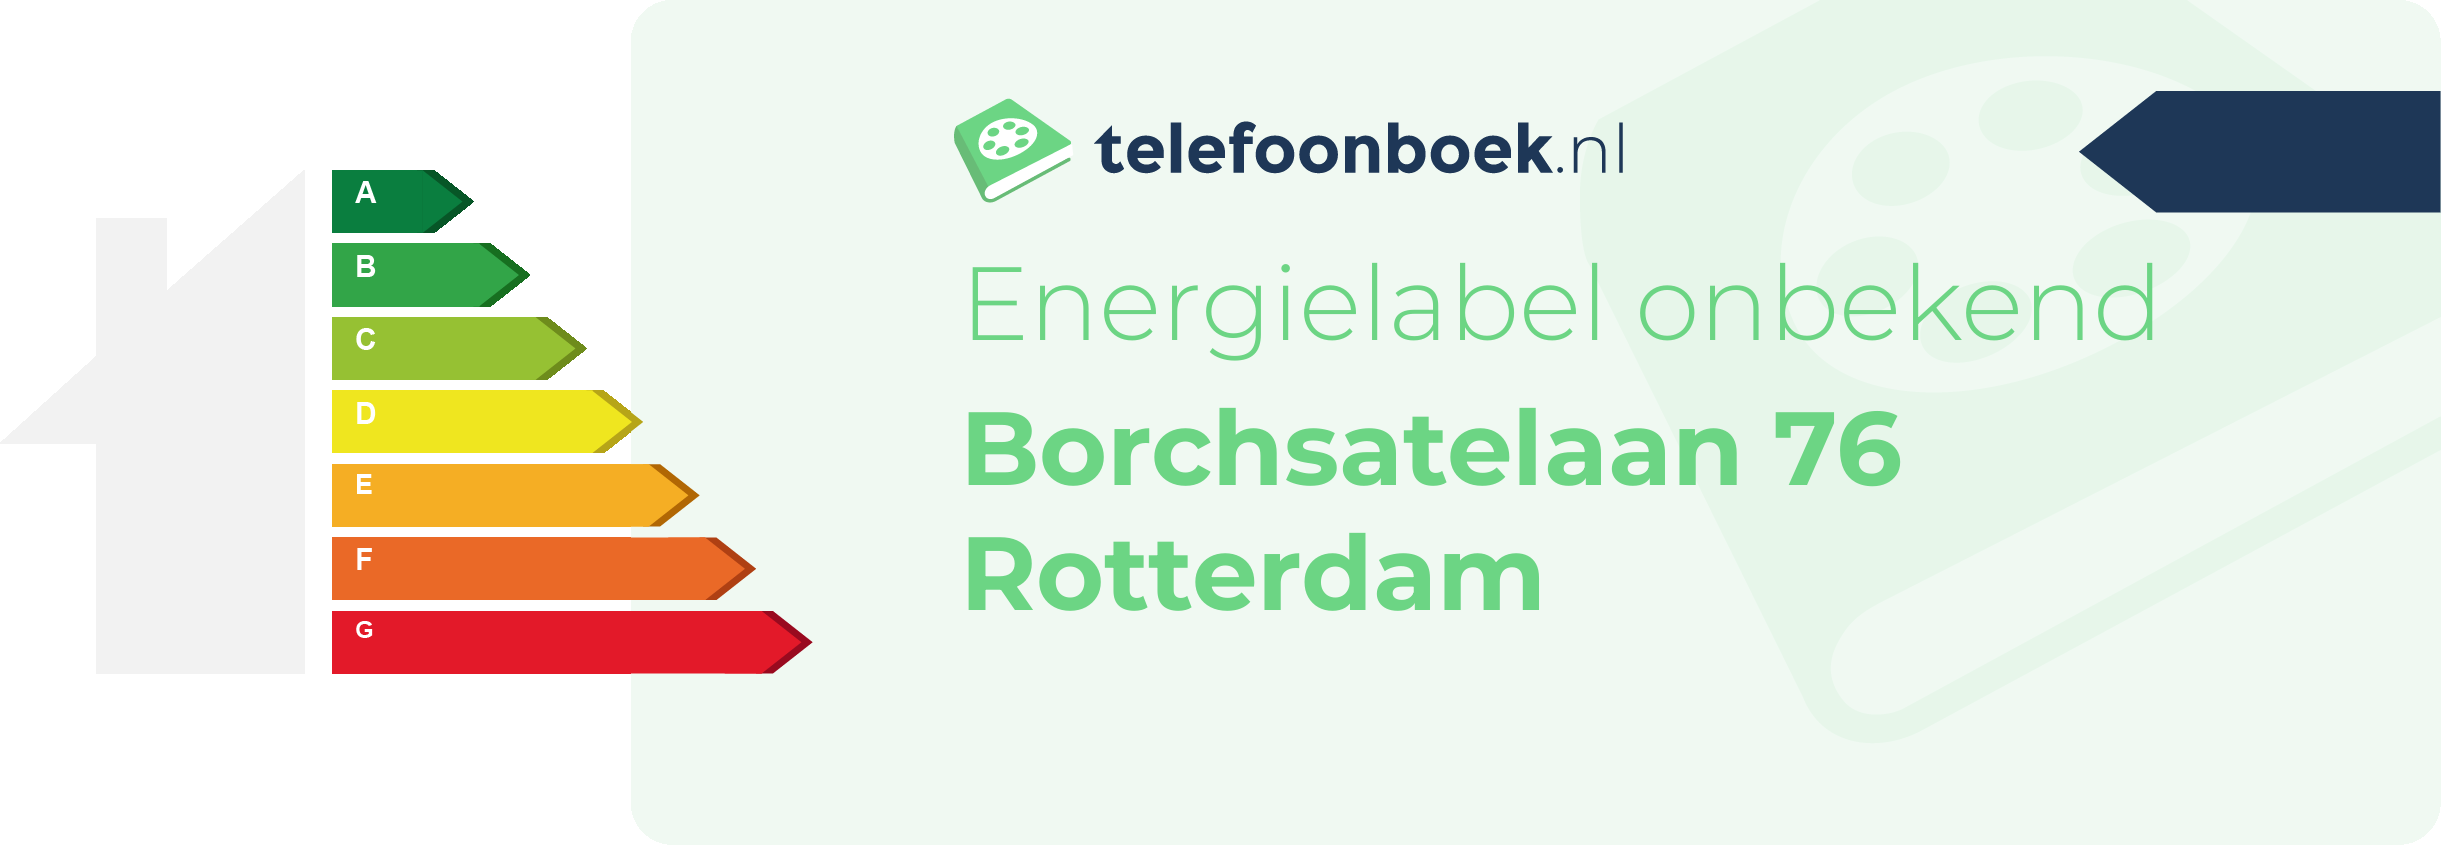 Energielabel Borchsatelaan 76 Rotterdam